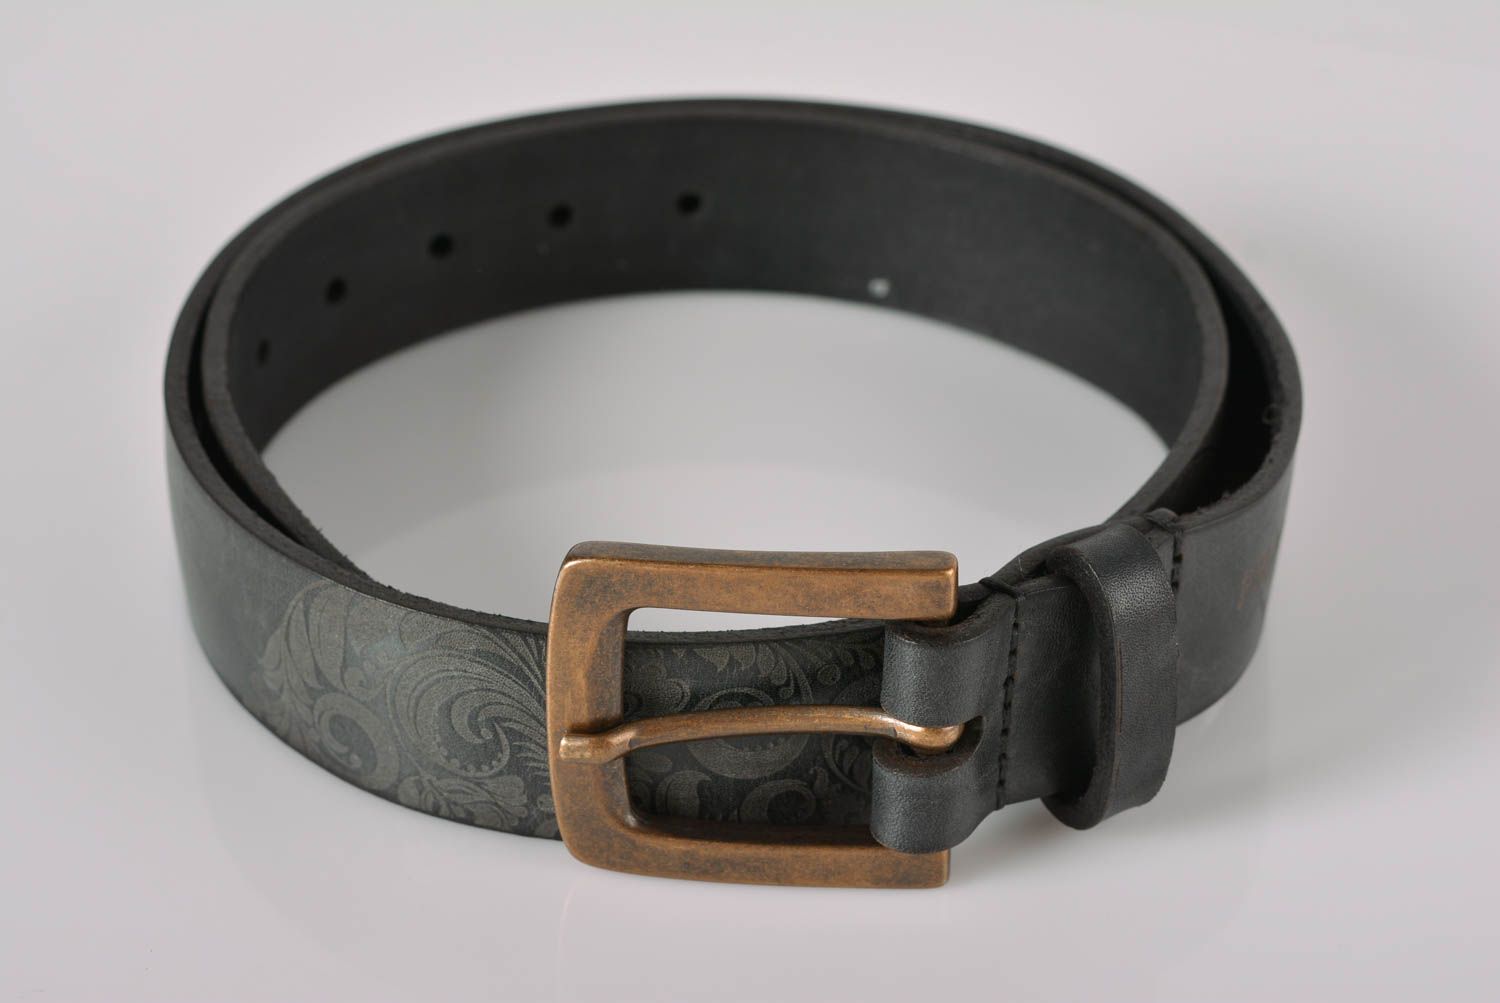 Cinturón de cuero artesanal bonito ropa masculina perfecta accesorio de moda foto 1